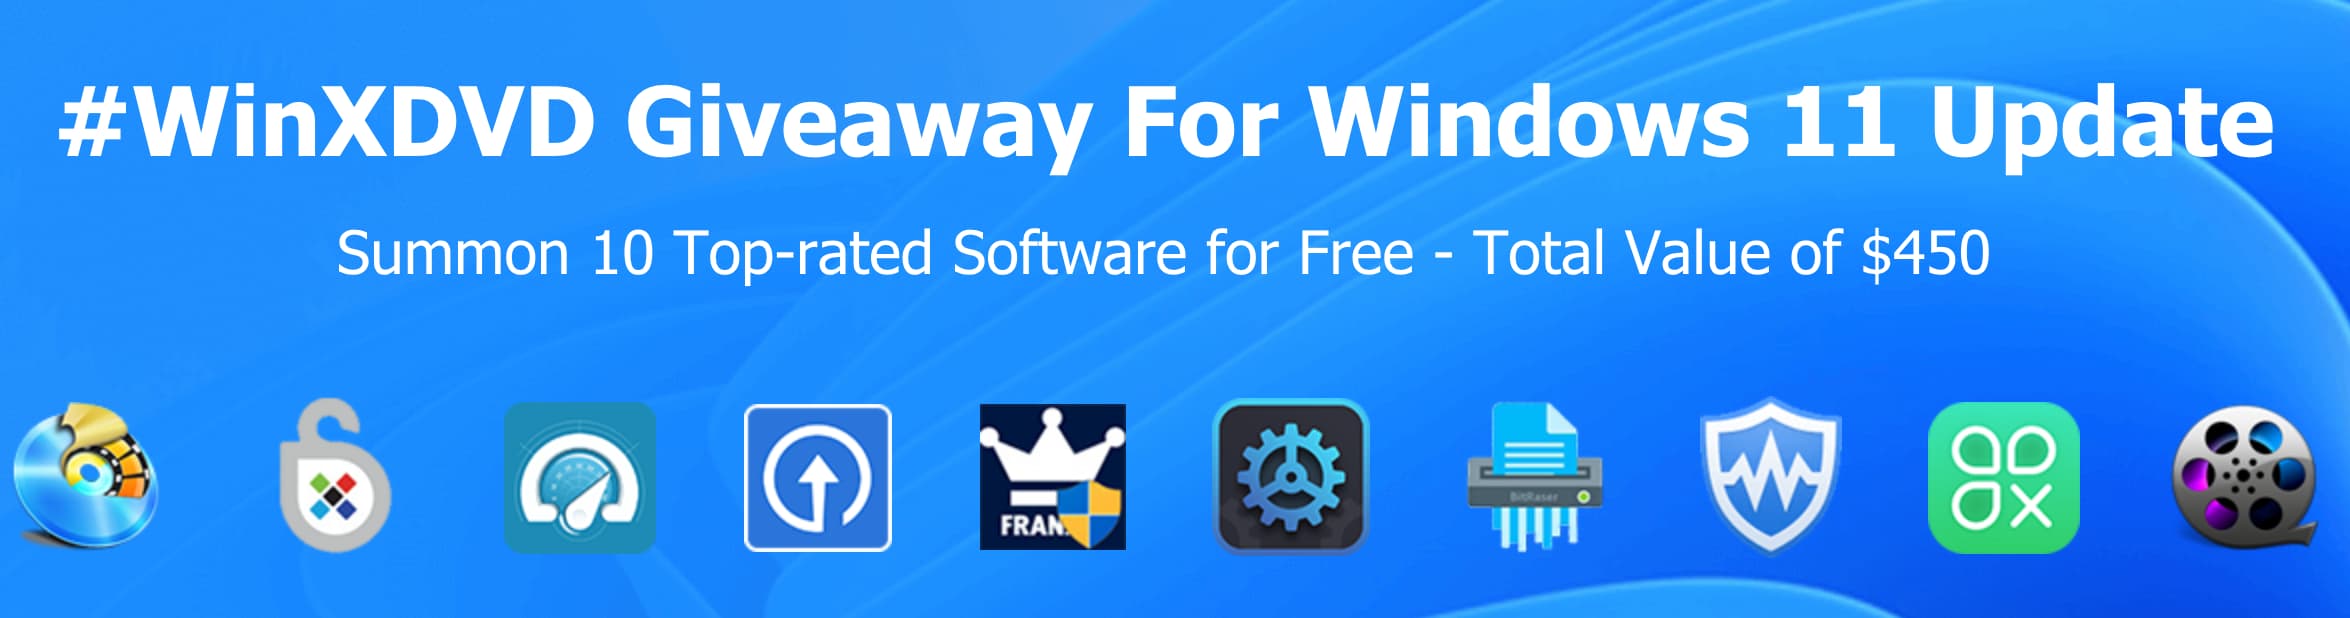 WinXDVD celebrates Windows 11 upgrade limited free event 2